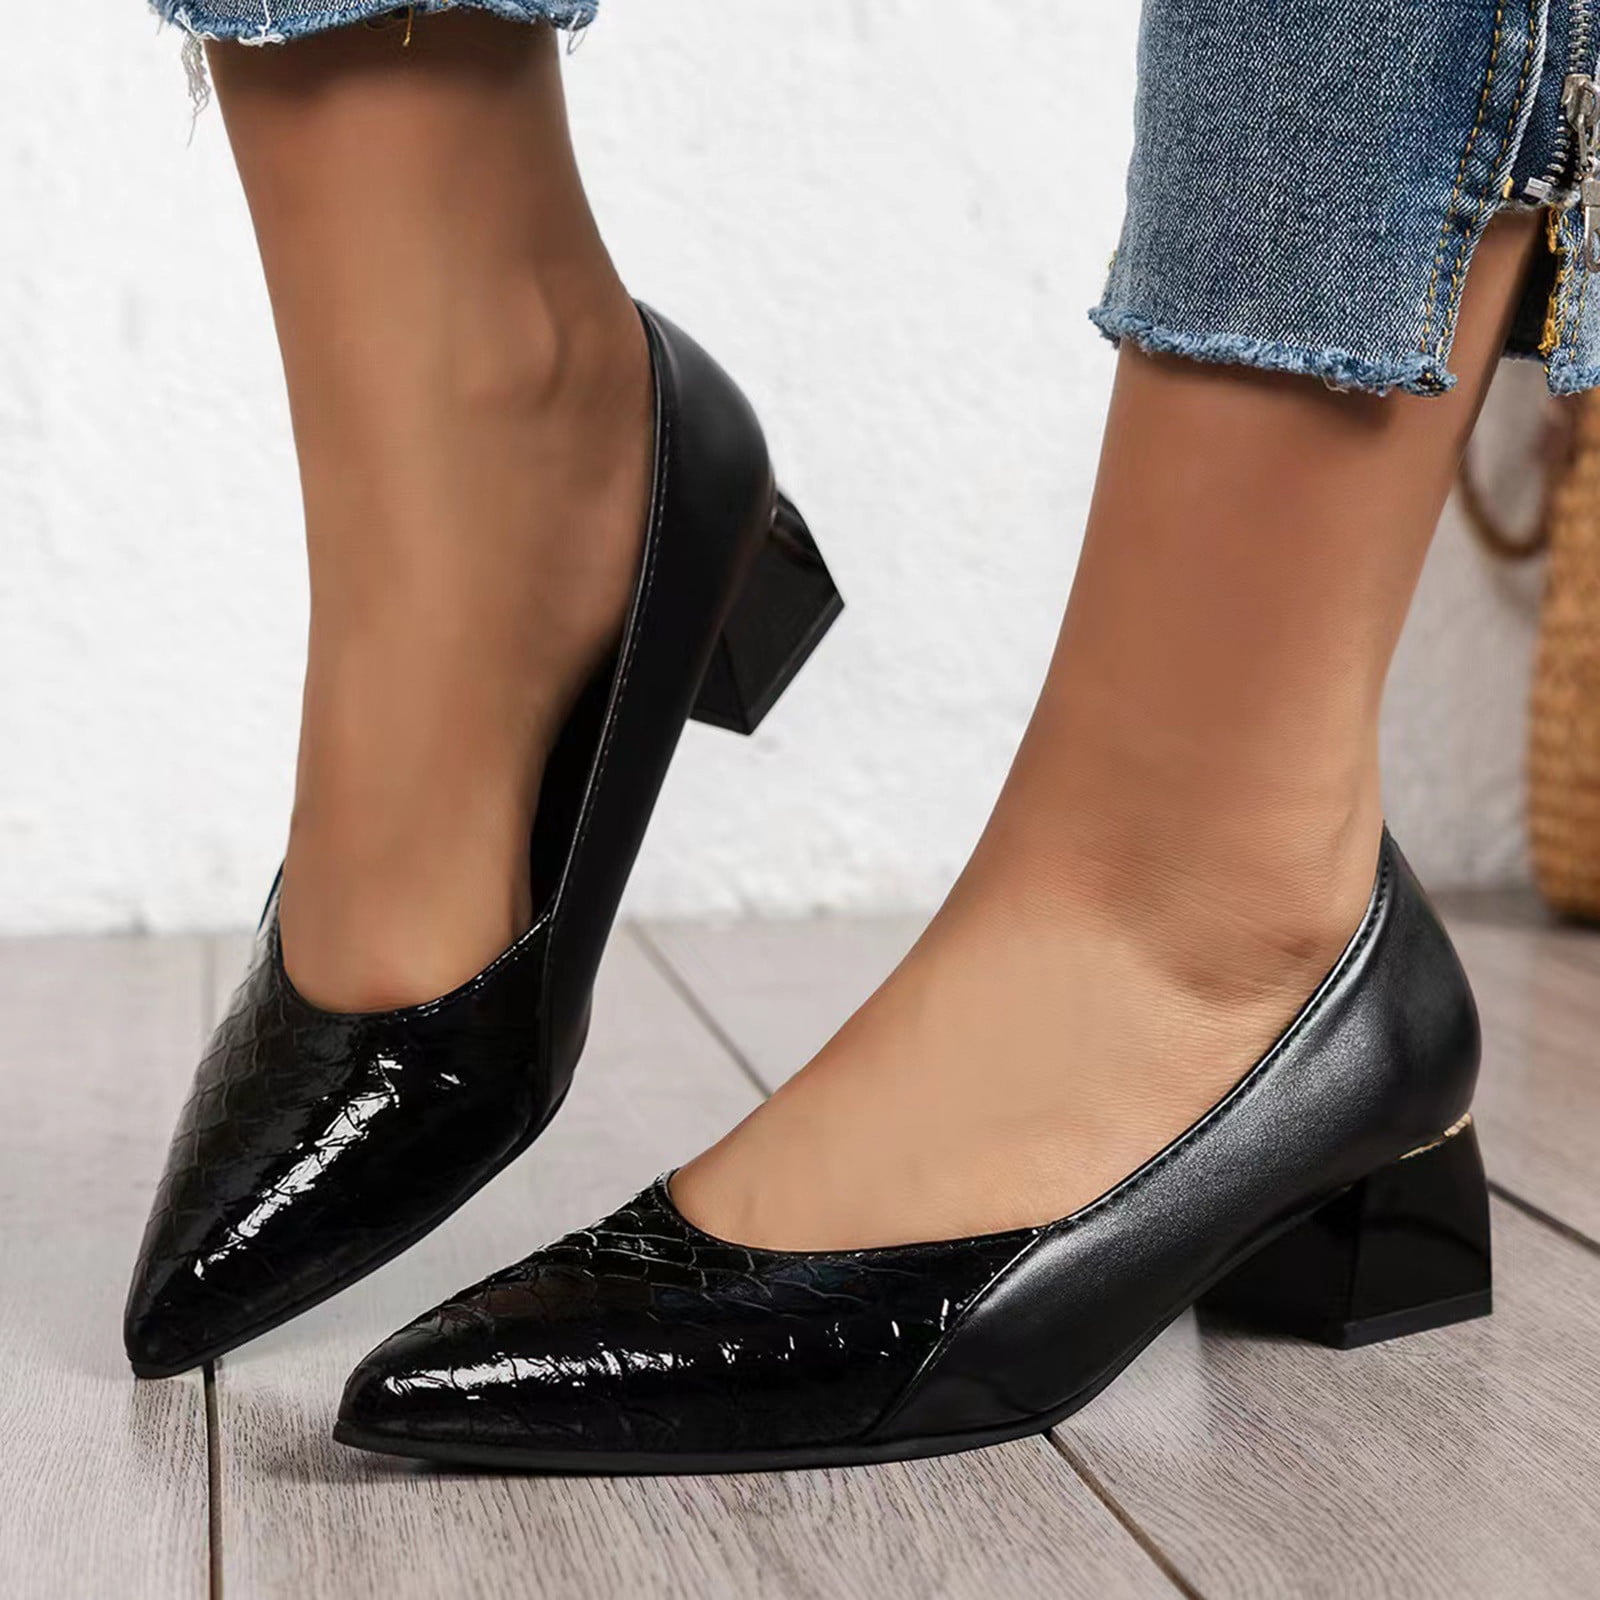 ladies dress shoes low heel